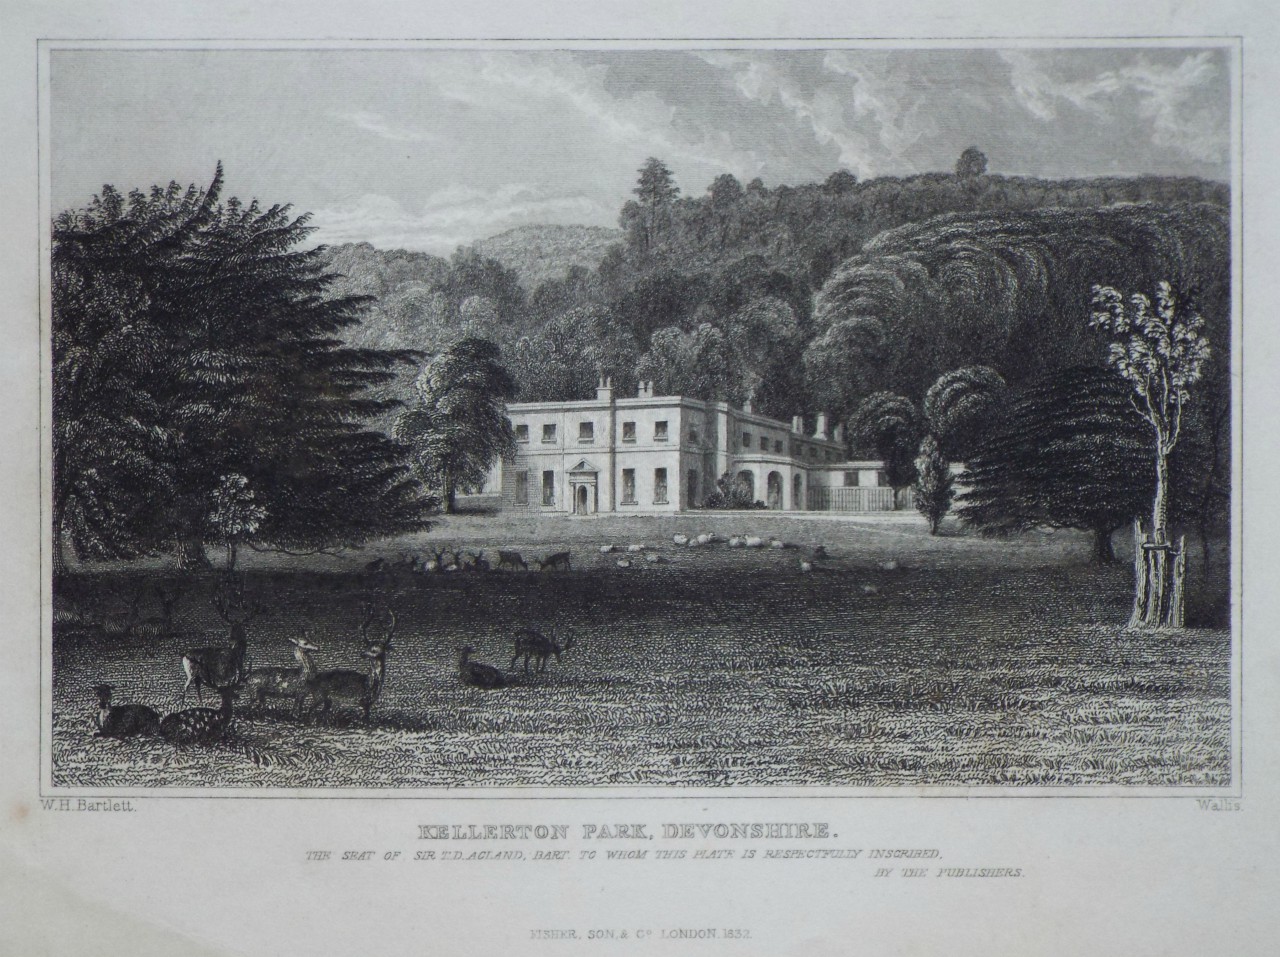 Print - Kellerton Park, Devonshire. The Seat of Sir T. D. Acland, Bart. - 